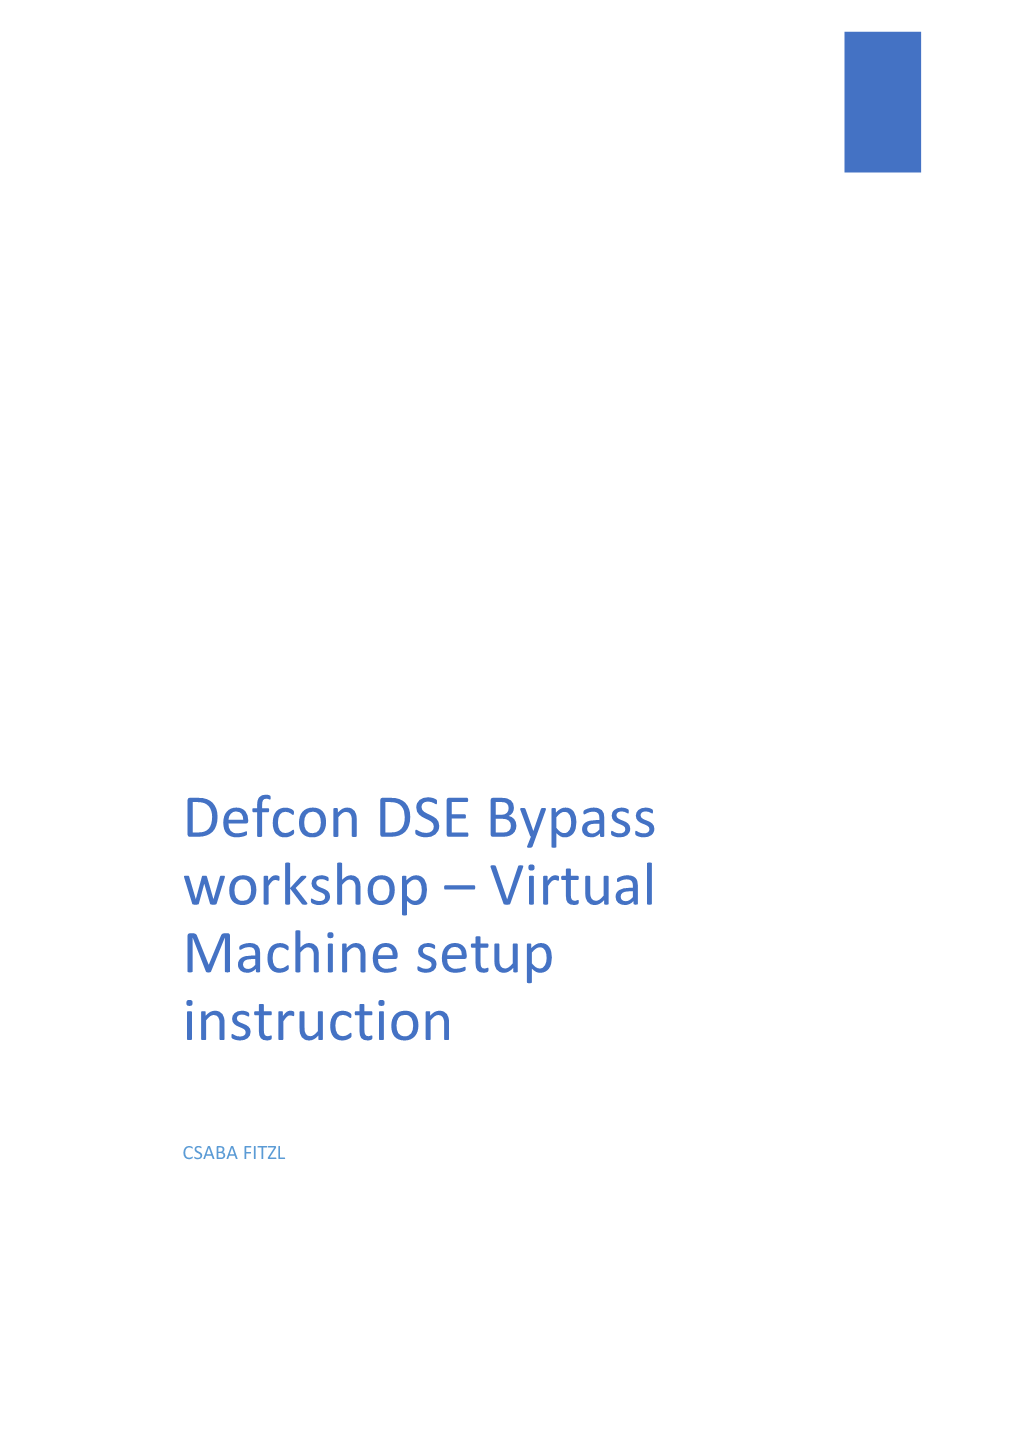 Defcon DSE Bypass Workshop – Virtual Machine Setup Instruction